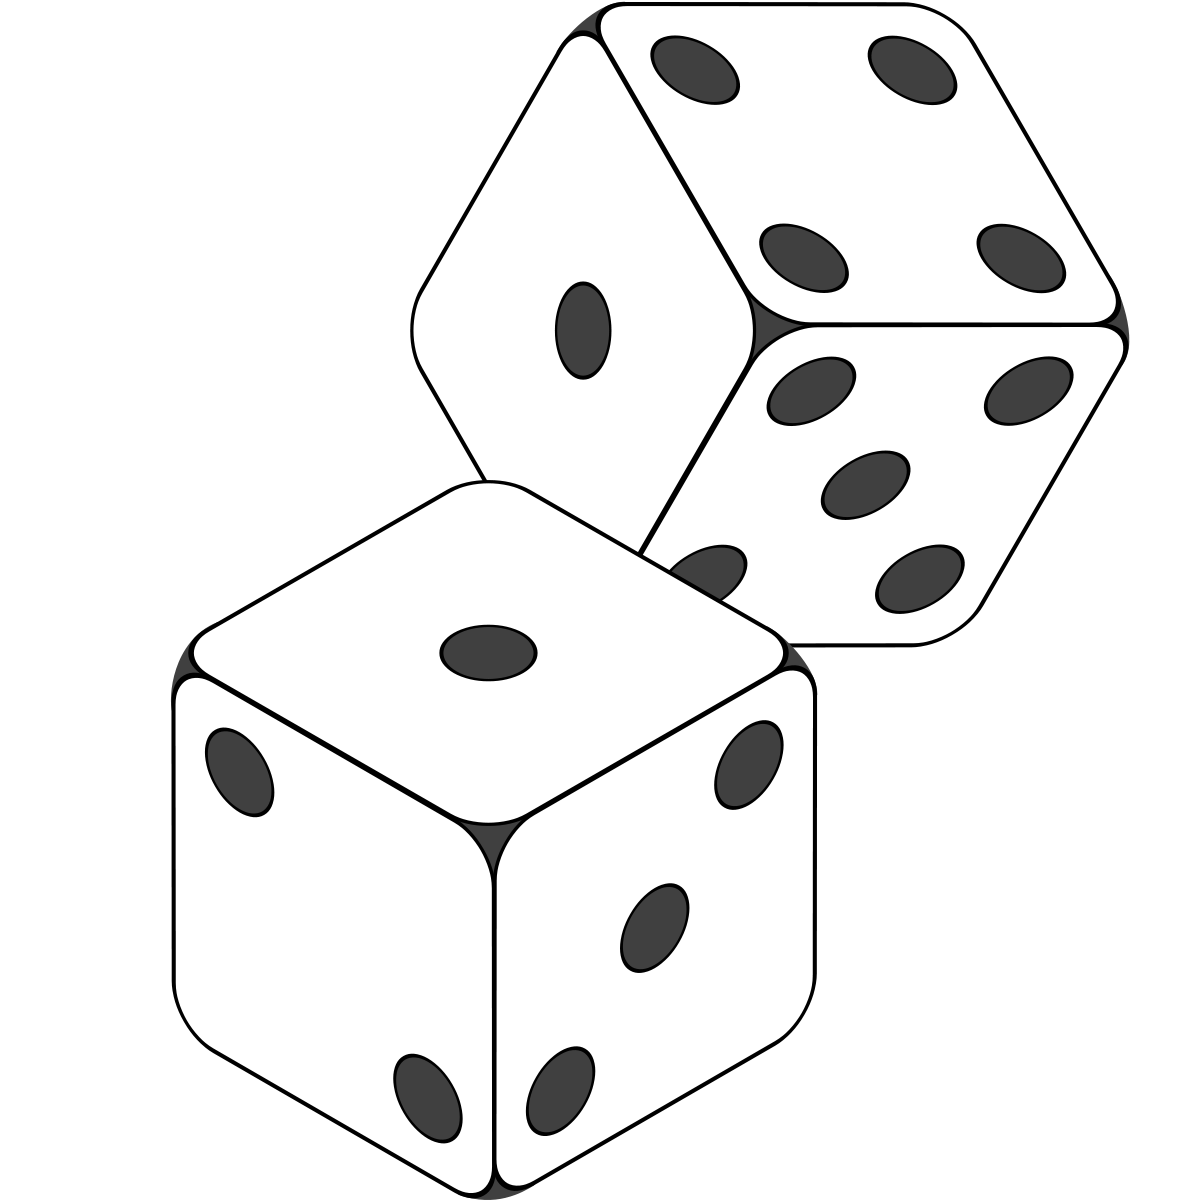 Bar dice - Wikipedia